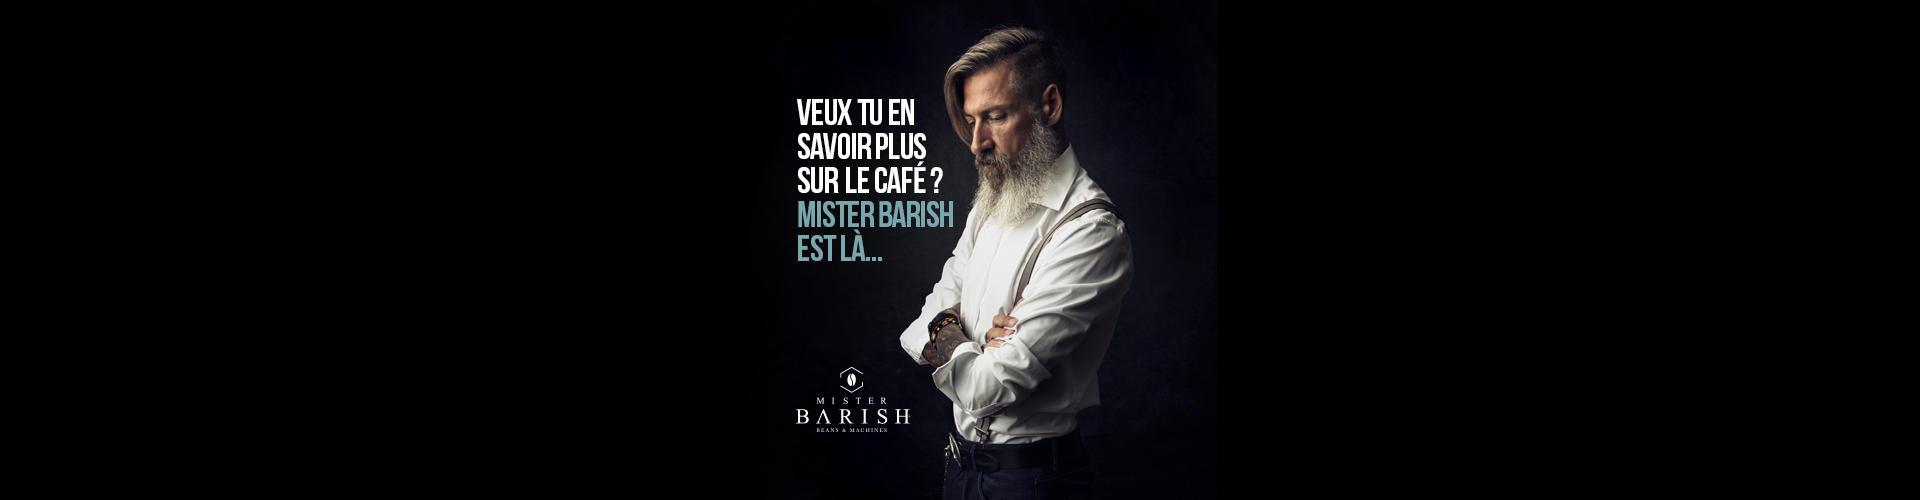 Mister Barish